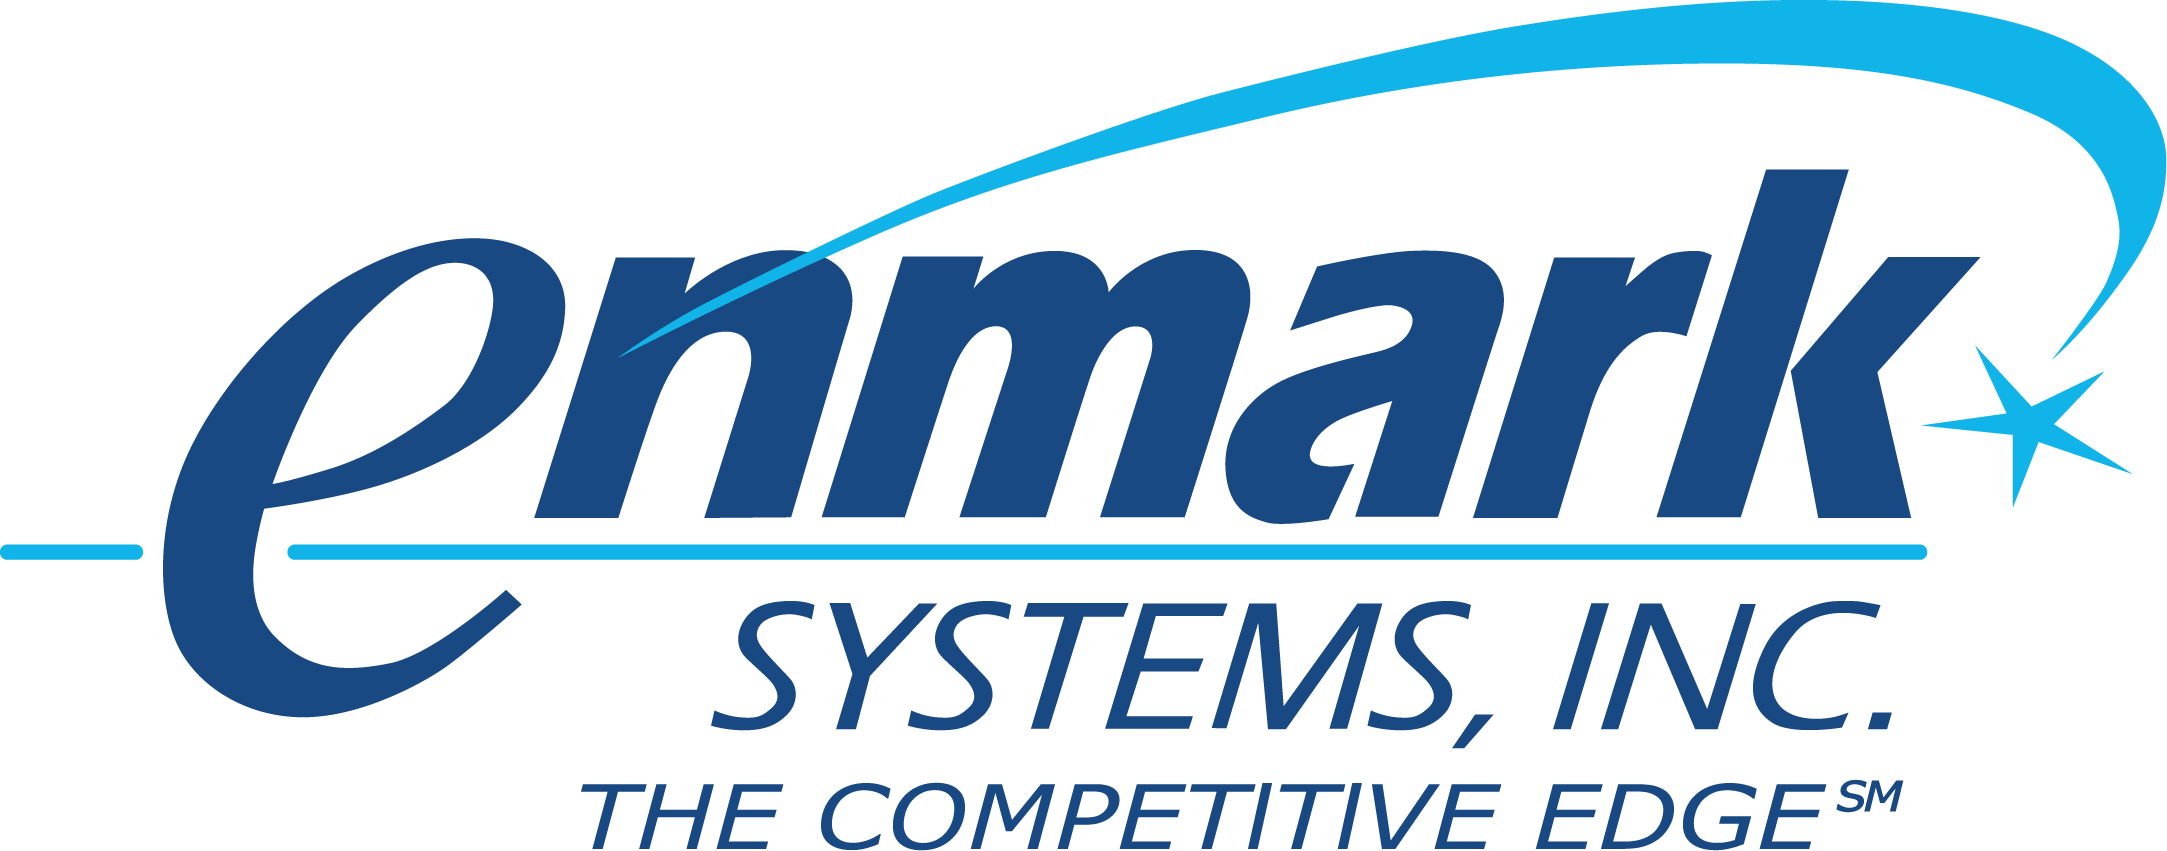 Enmark logo 2014